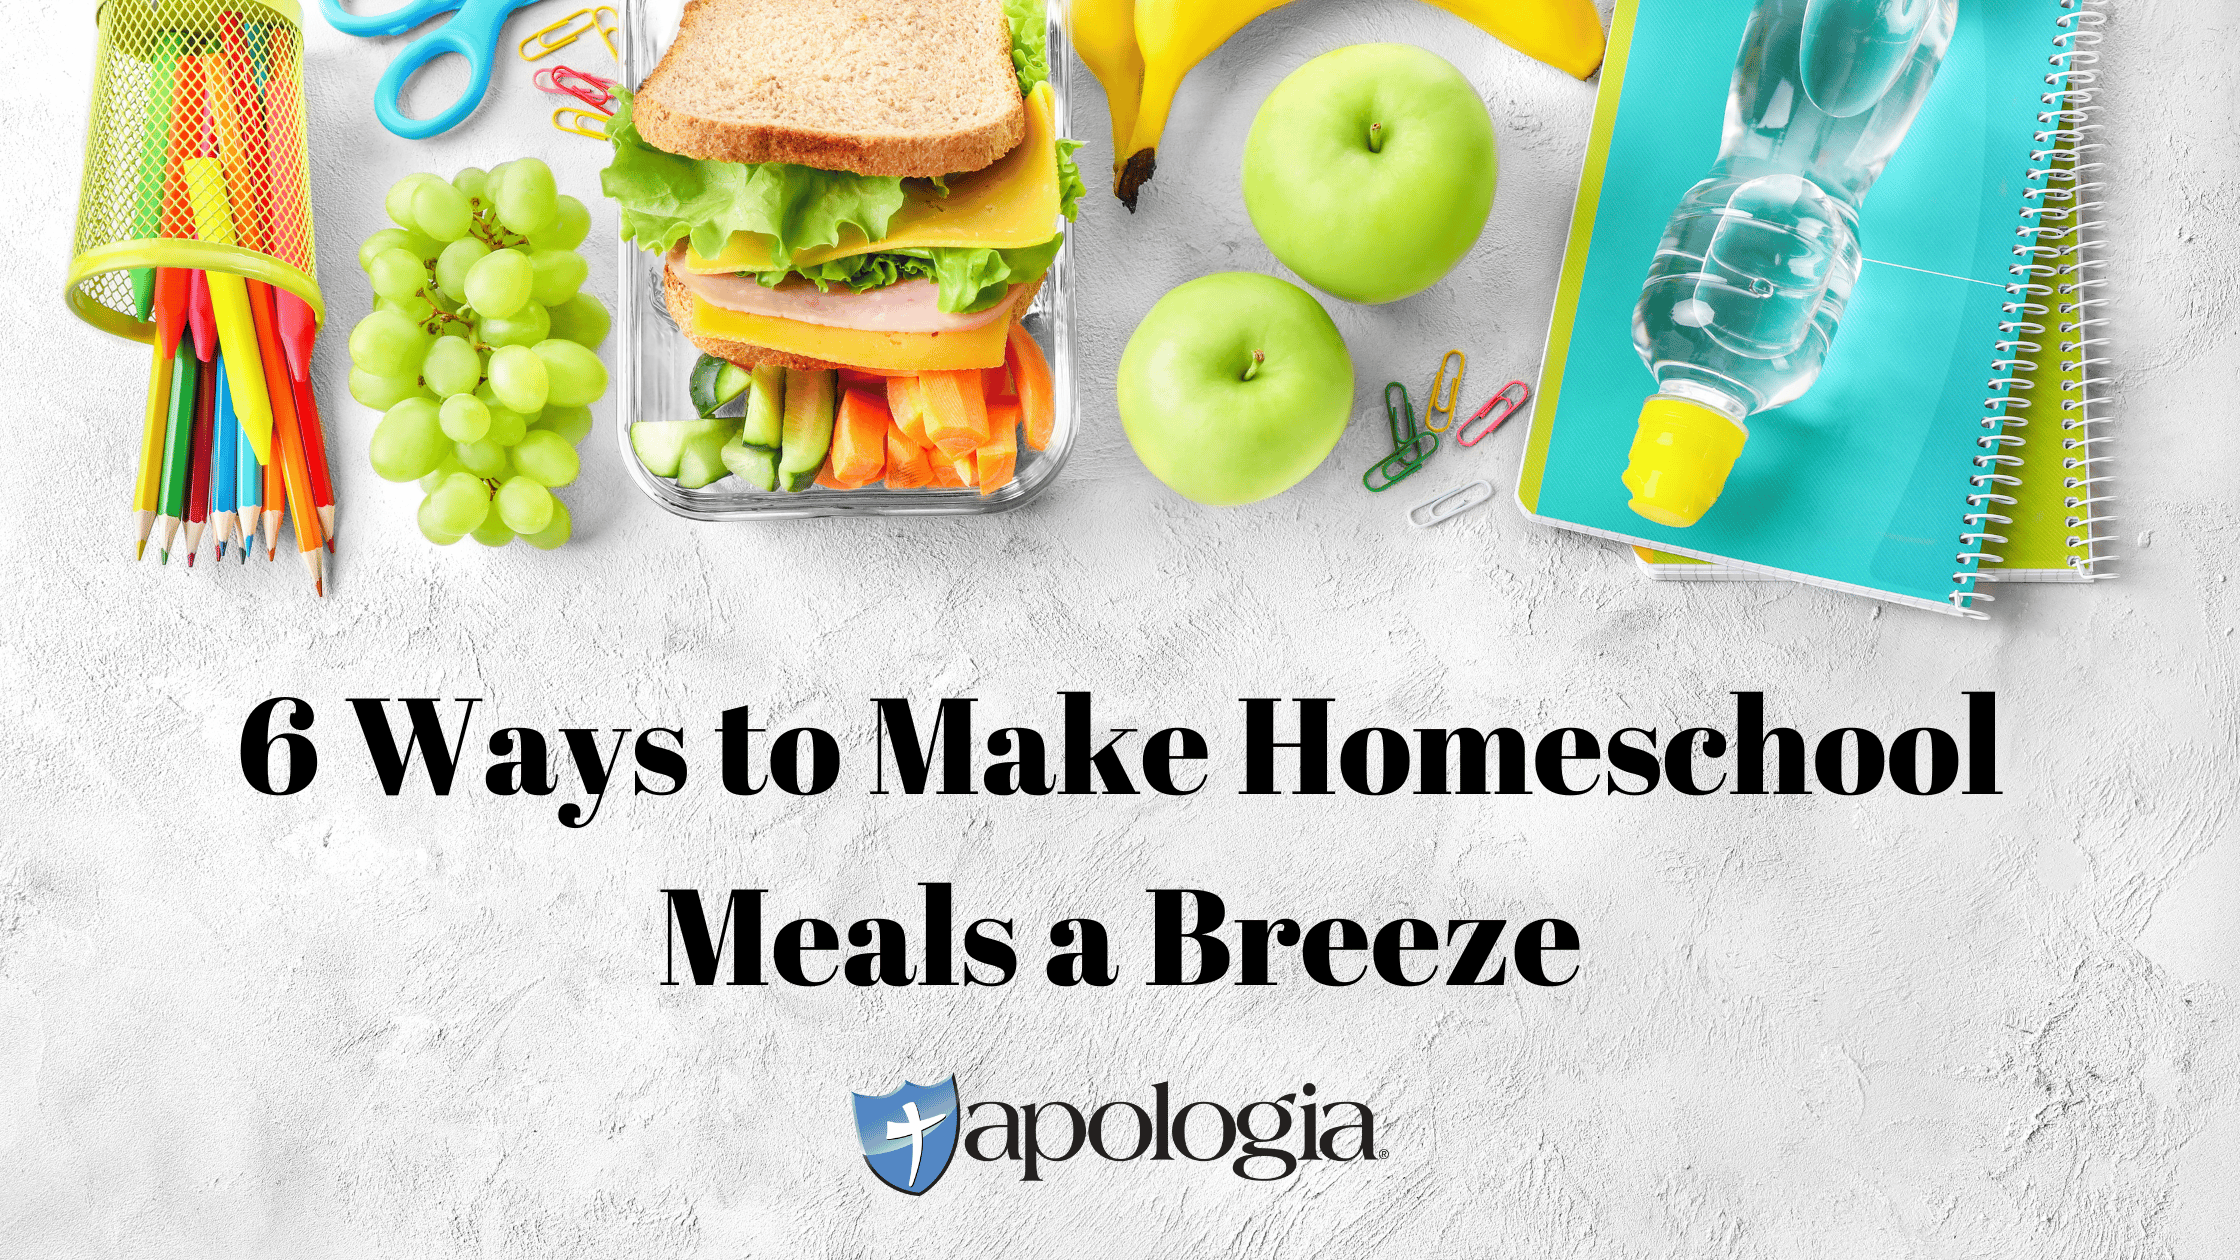 6 Ways to Make Homeschool Meals a Breeze